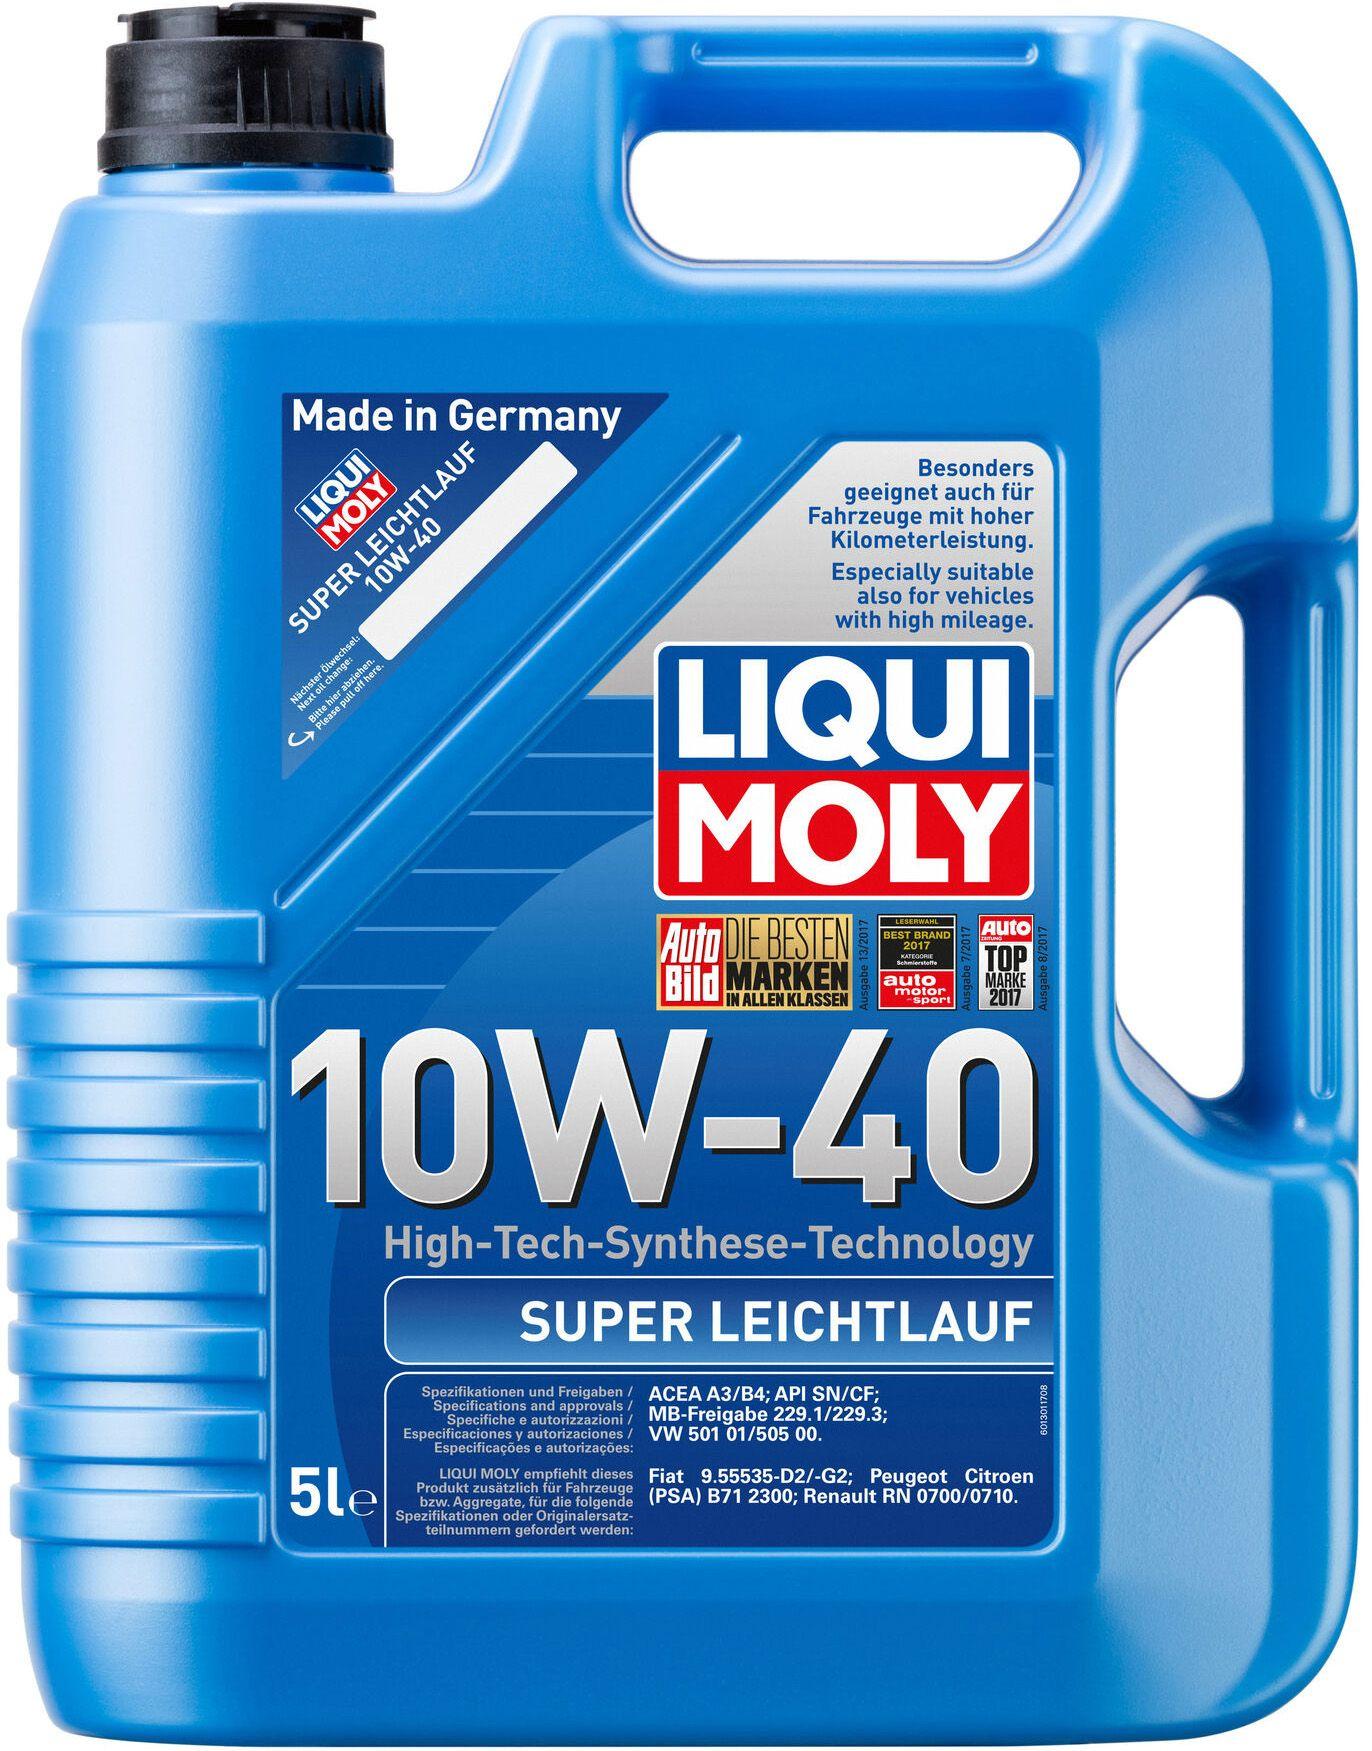 Моторное масло Liqui Moly Super Leichtlauf 10W-40, 5 литров (1929)